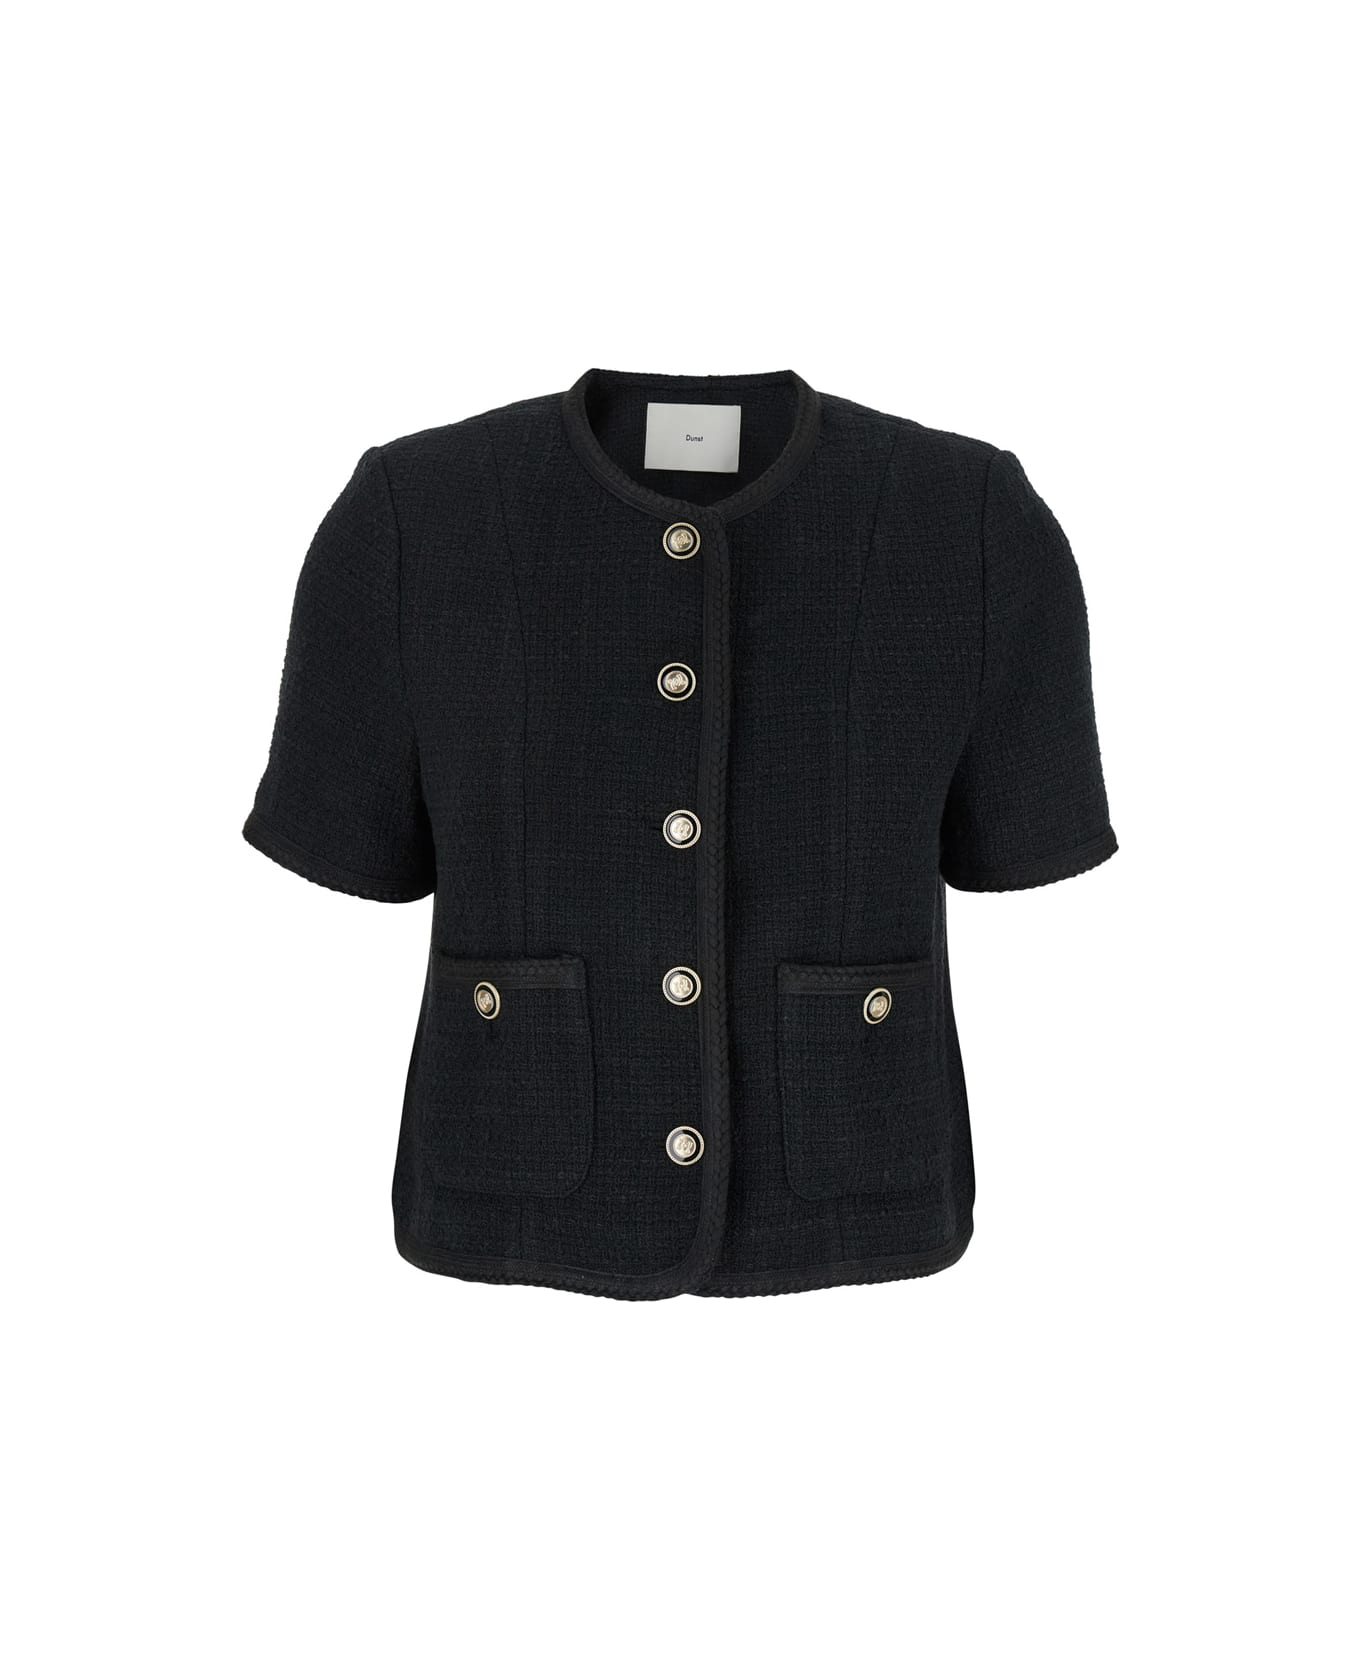 Dunst Summer Tweed Jacket - Black ジャケット